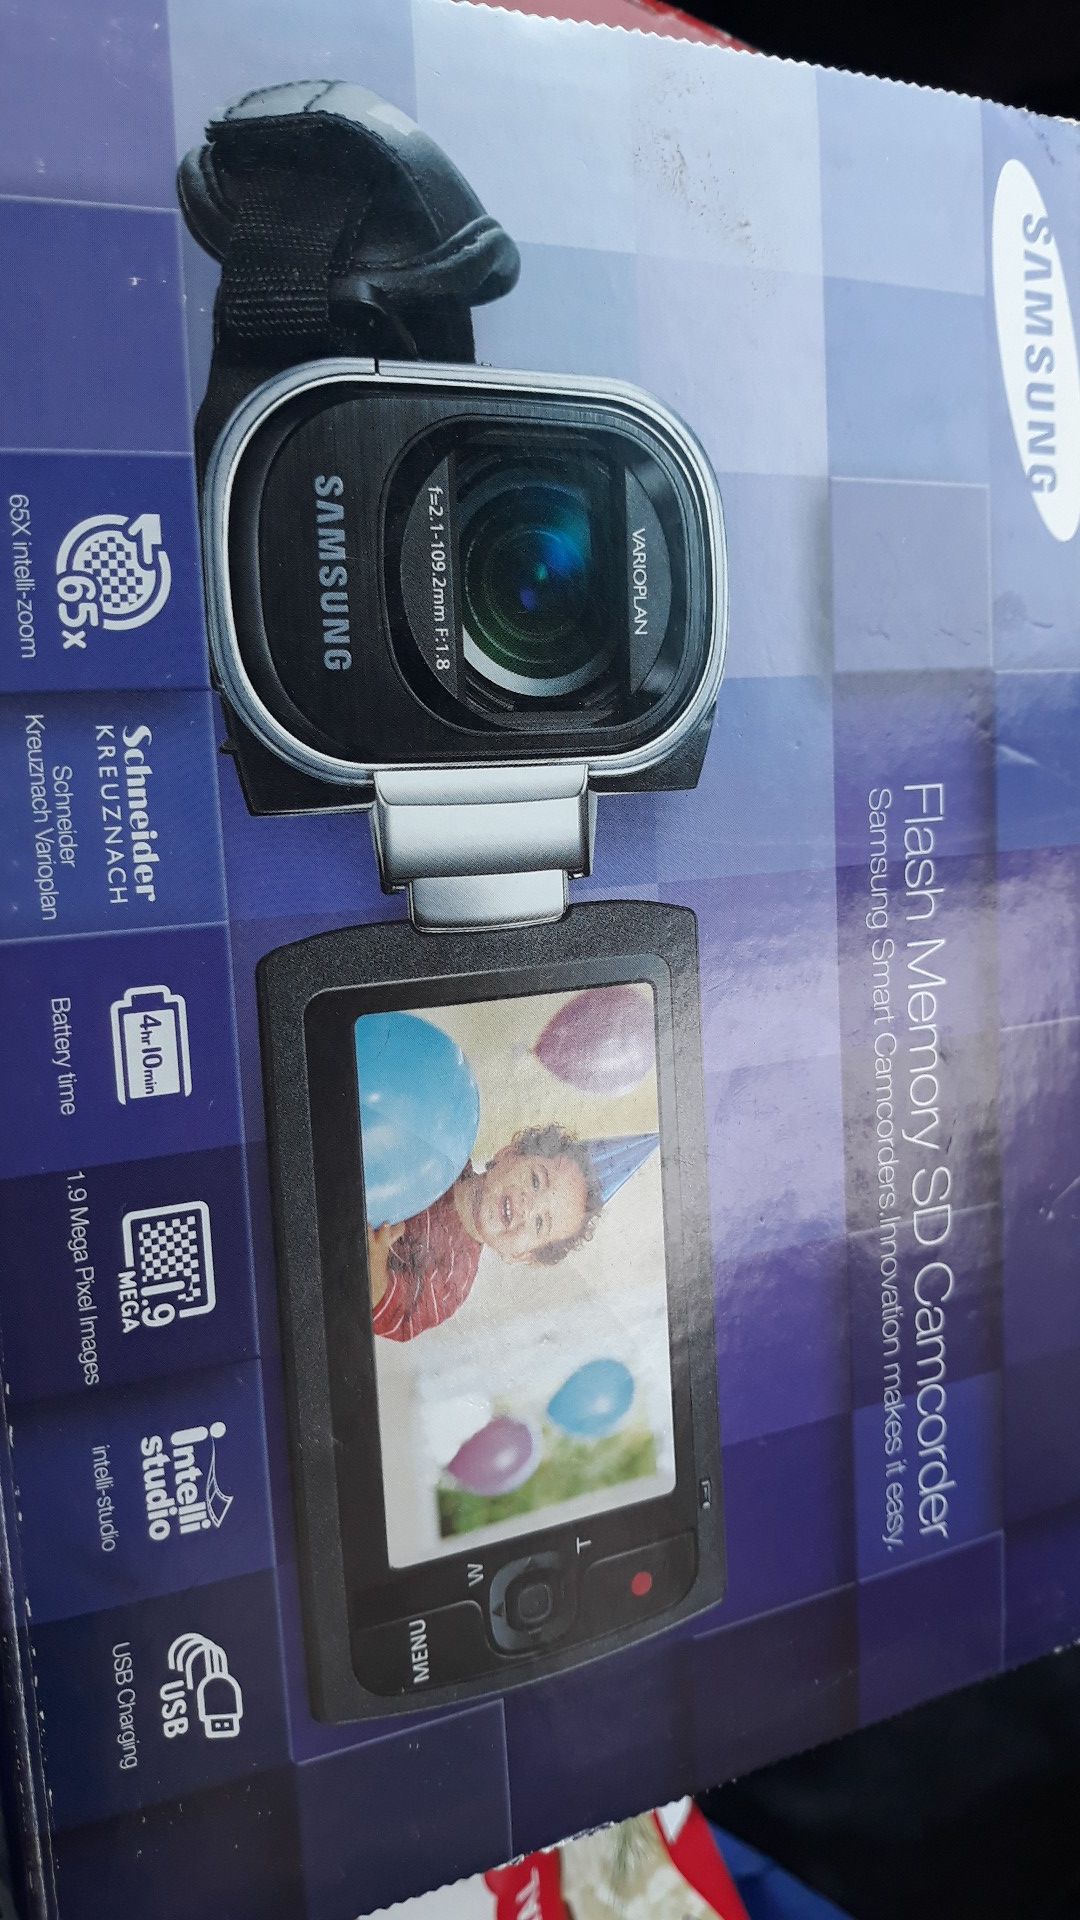 Samsung flash memory SDK camcorder